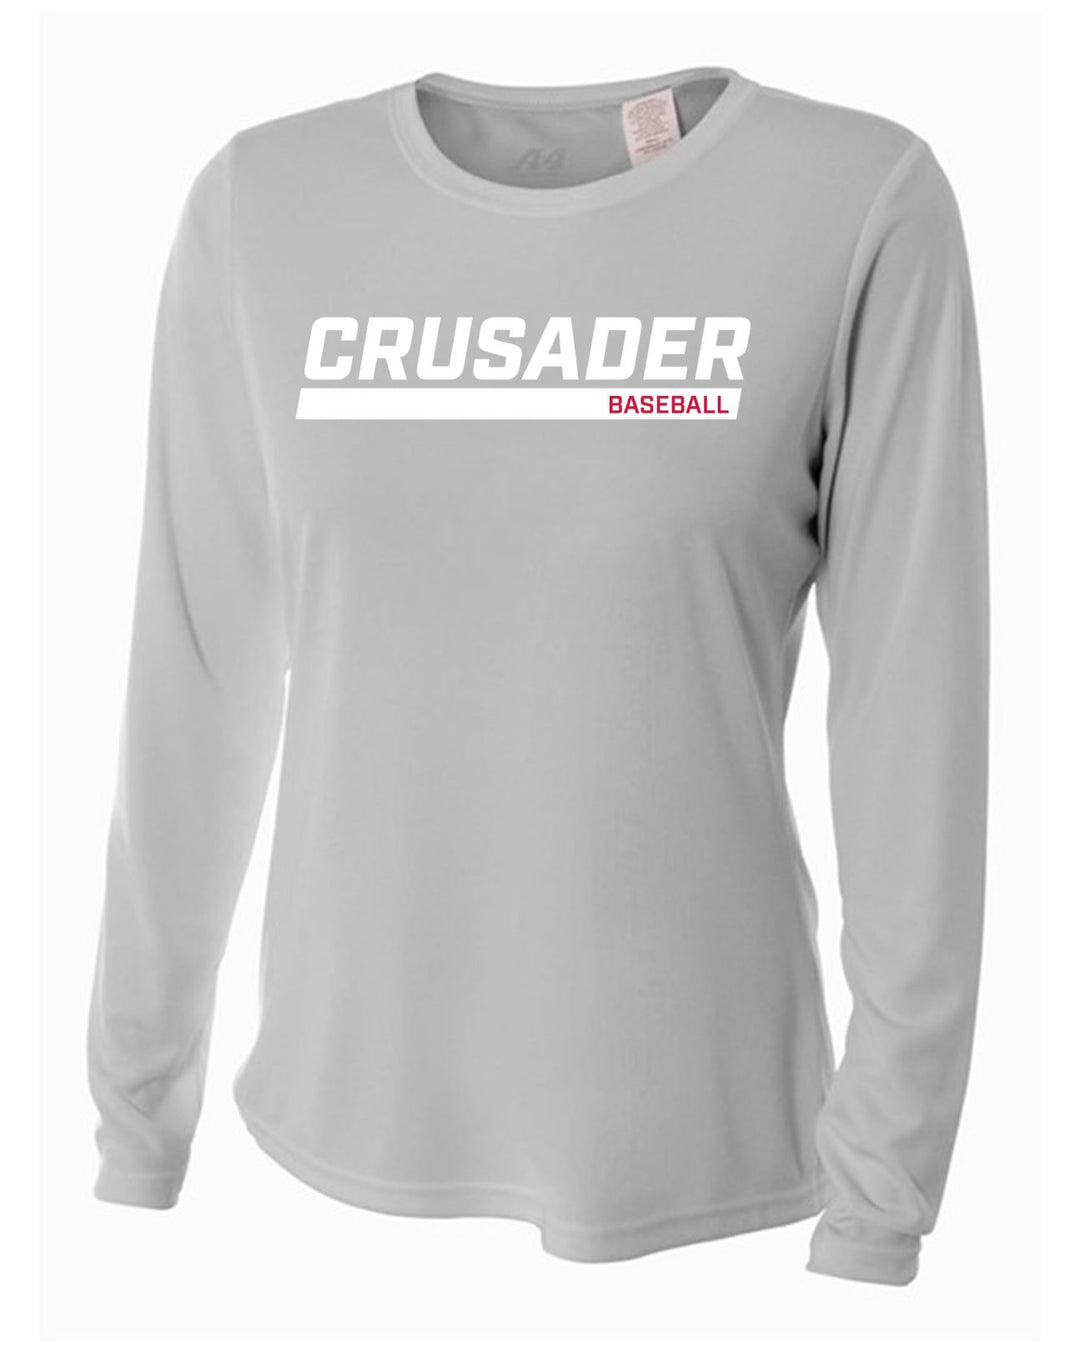 WCU Baseball Women's Long-Sleeve Performance Shirt WCU Baseball Silver CRUSADER - Third Coast Soccer